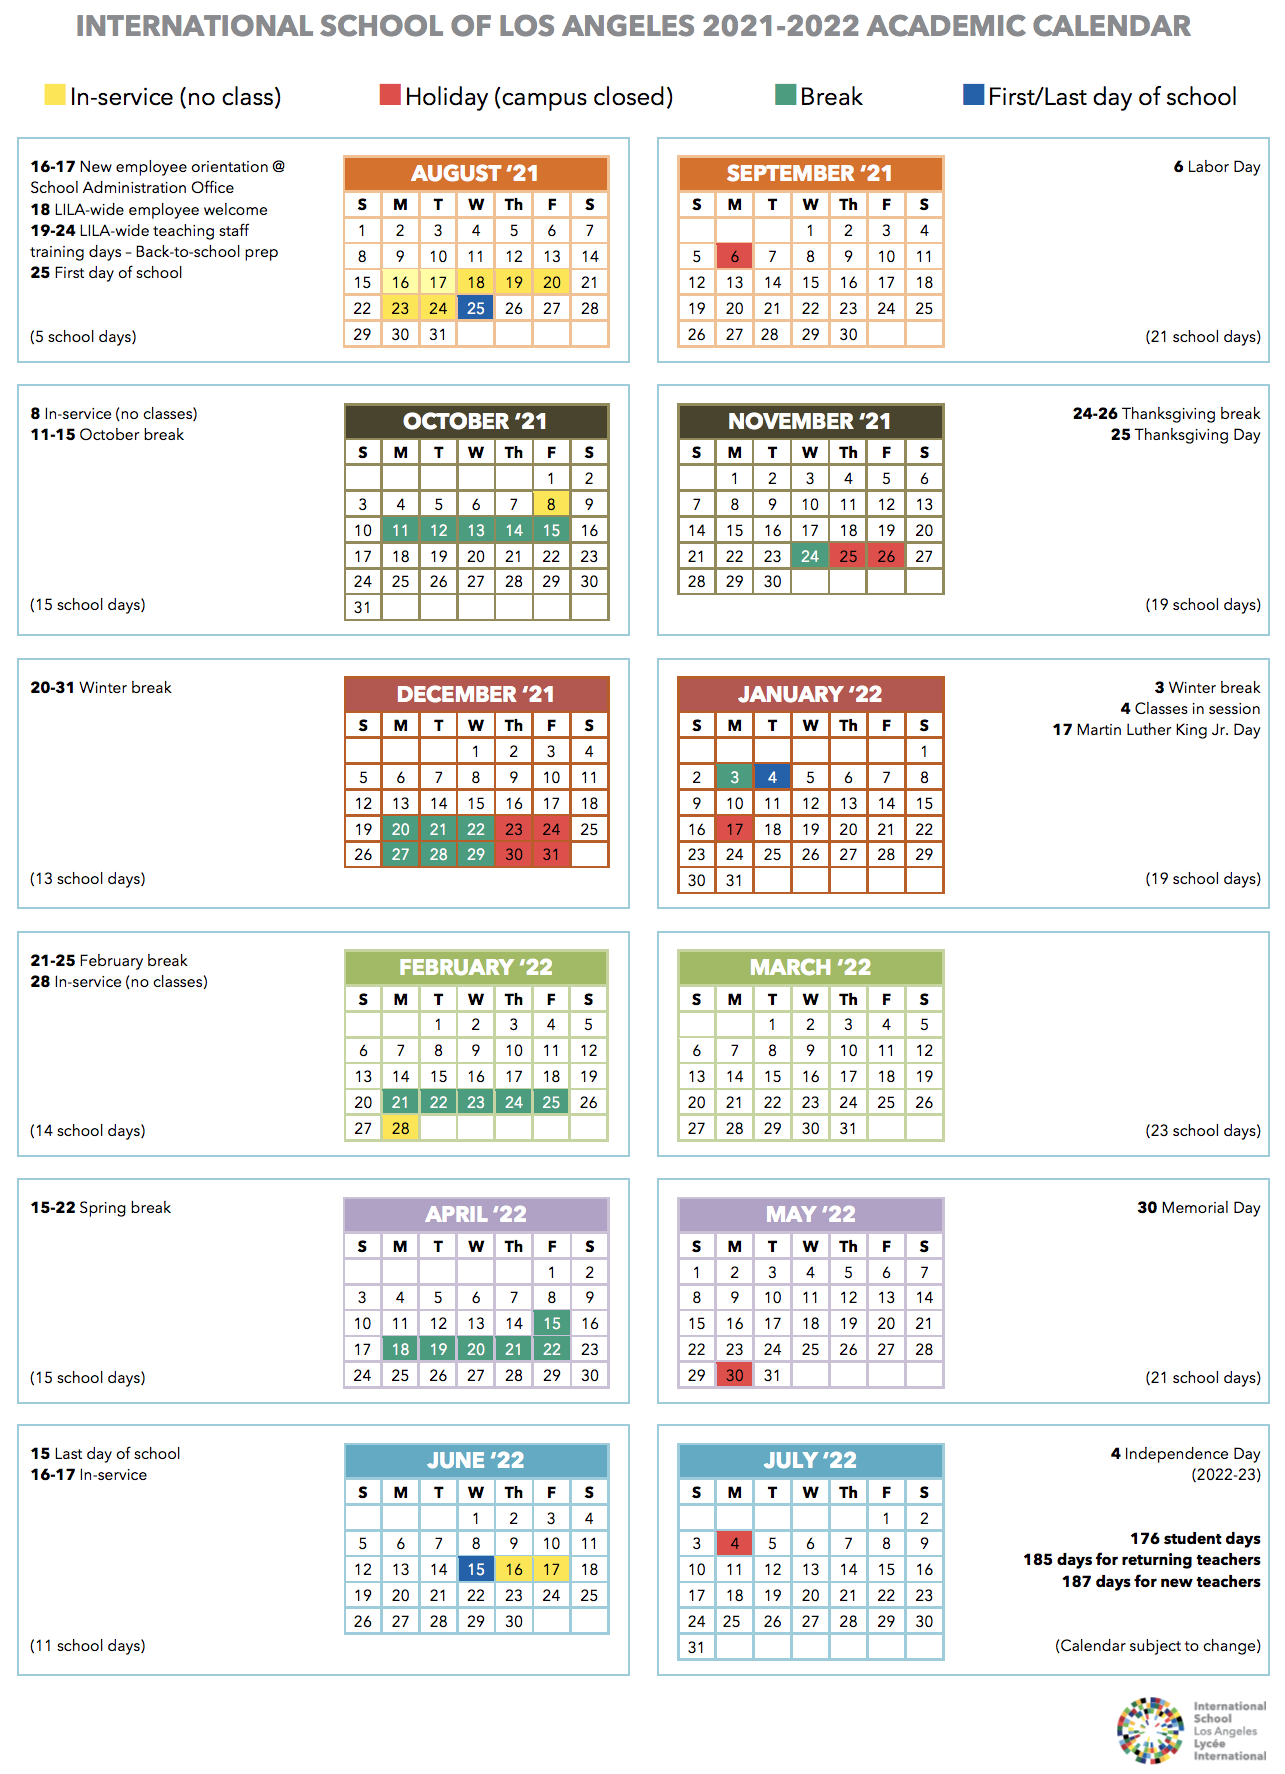 Csulb 2022 23 Calendar Calendar | International School Of Los Angeles